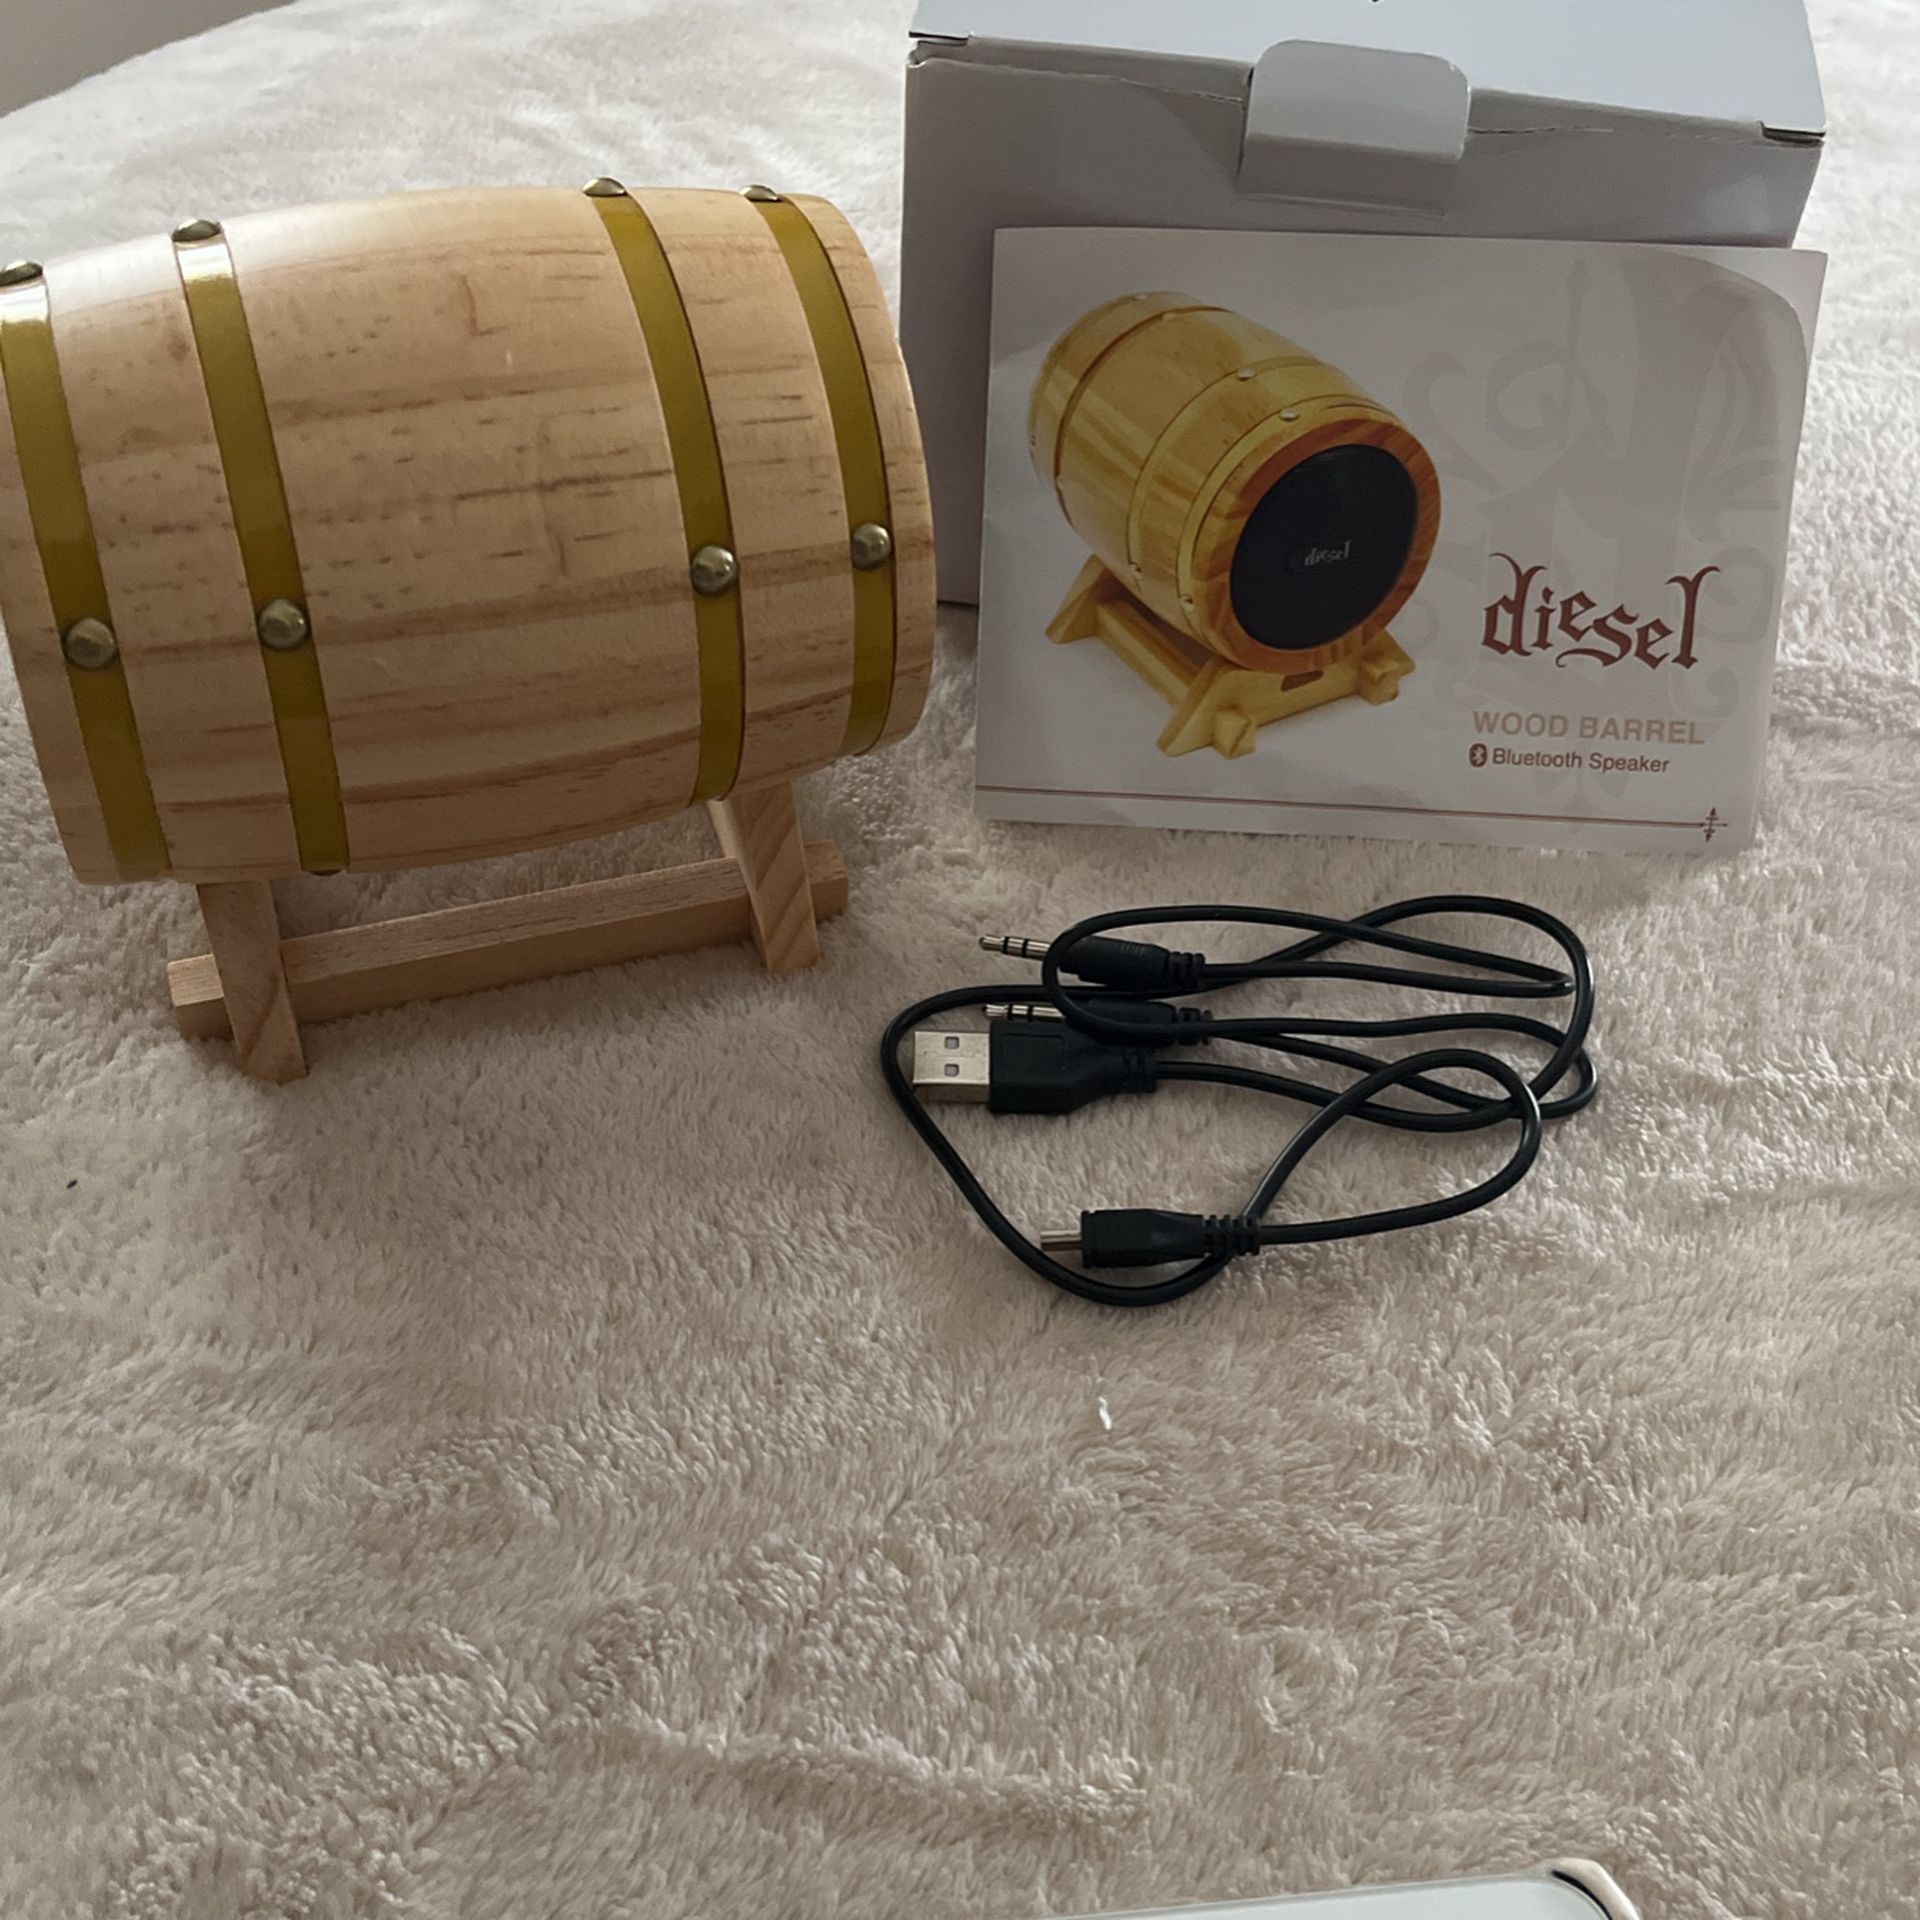 Wood Barrel Bluetooth Speaker